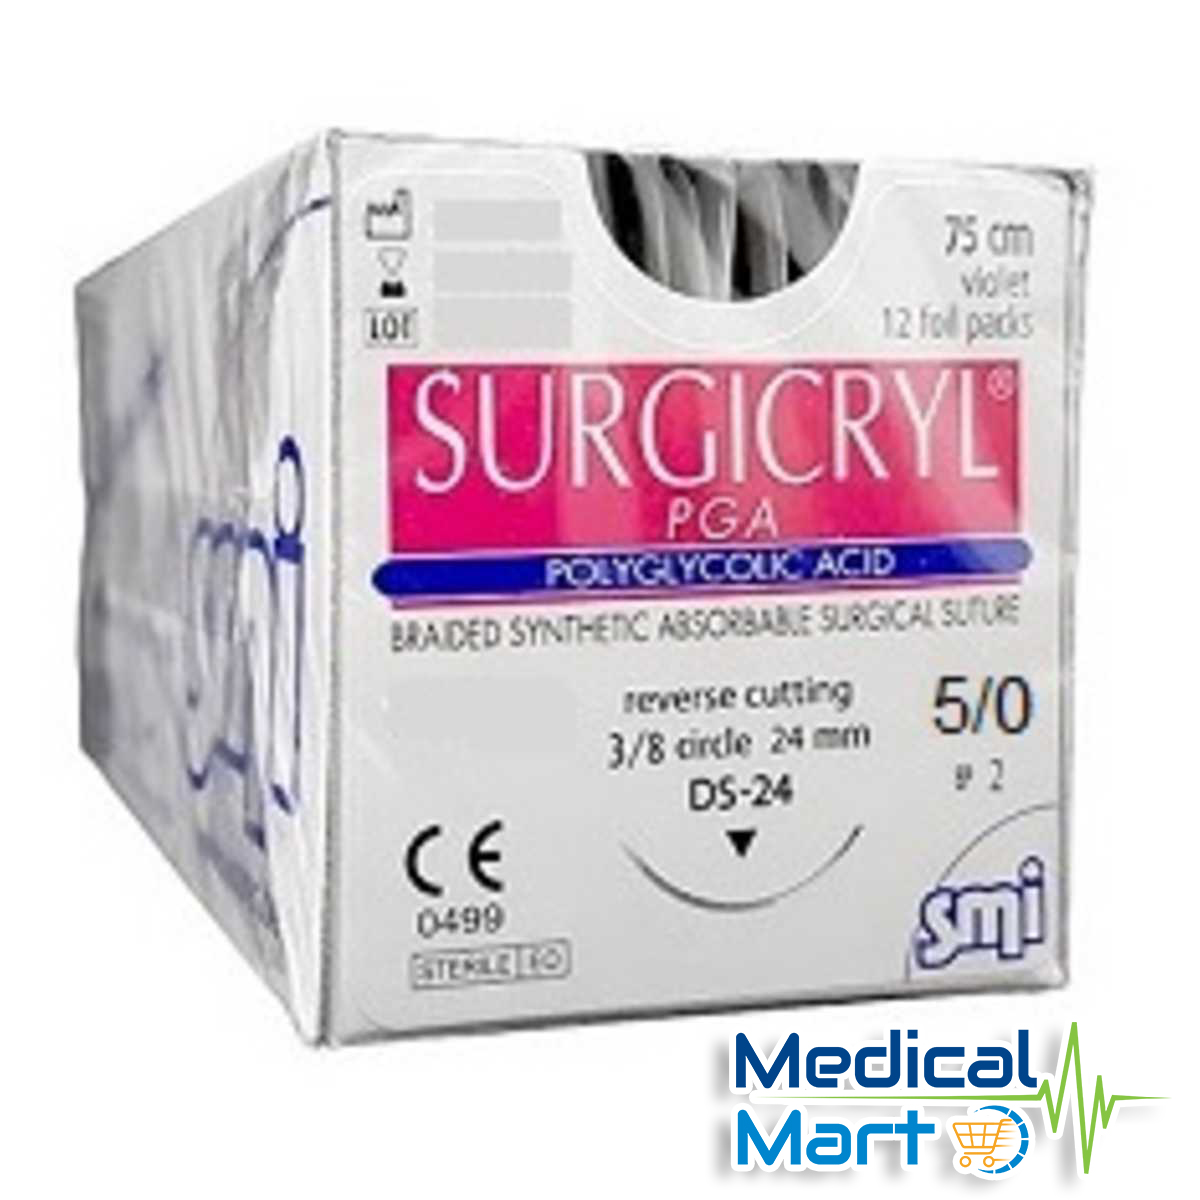 5/0 Surgicryl Pga (Polyglycolic Acid)